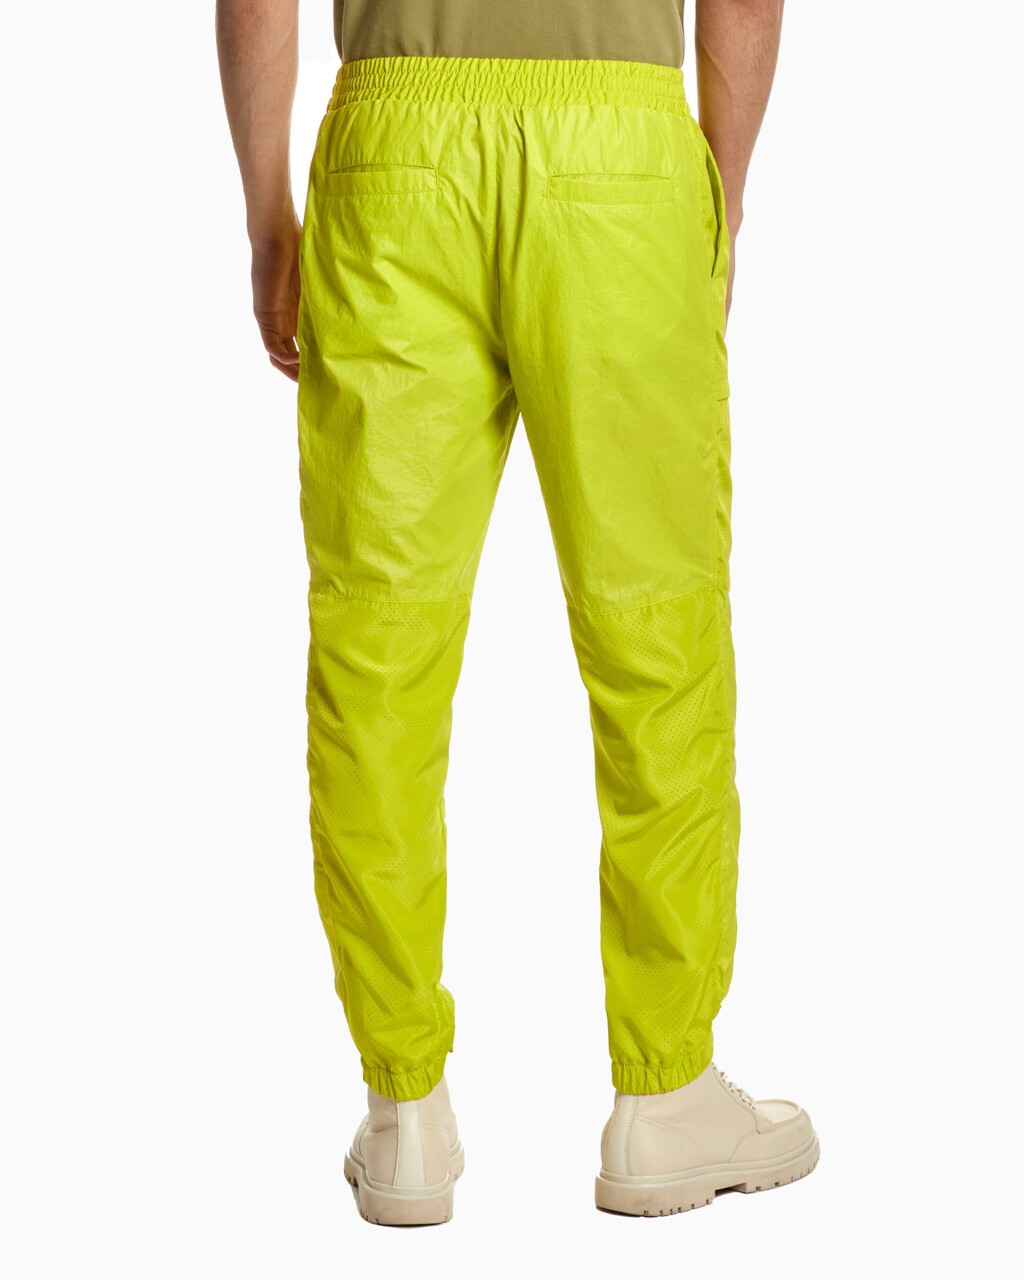 Reimagine Nature Perforated Cargo Pants, Lemon Lime, hi-res